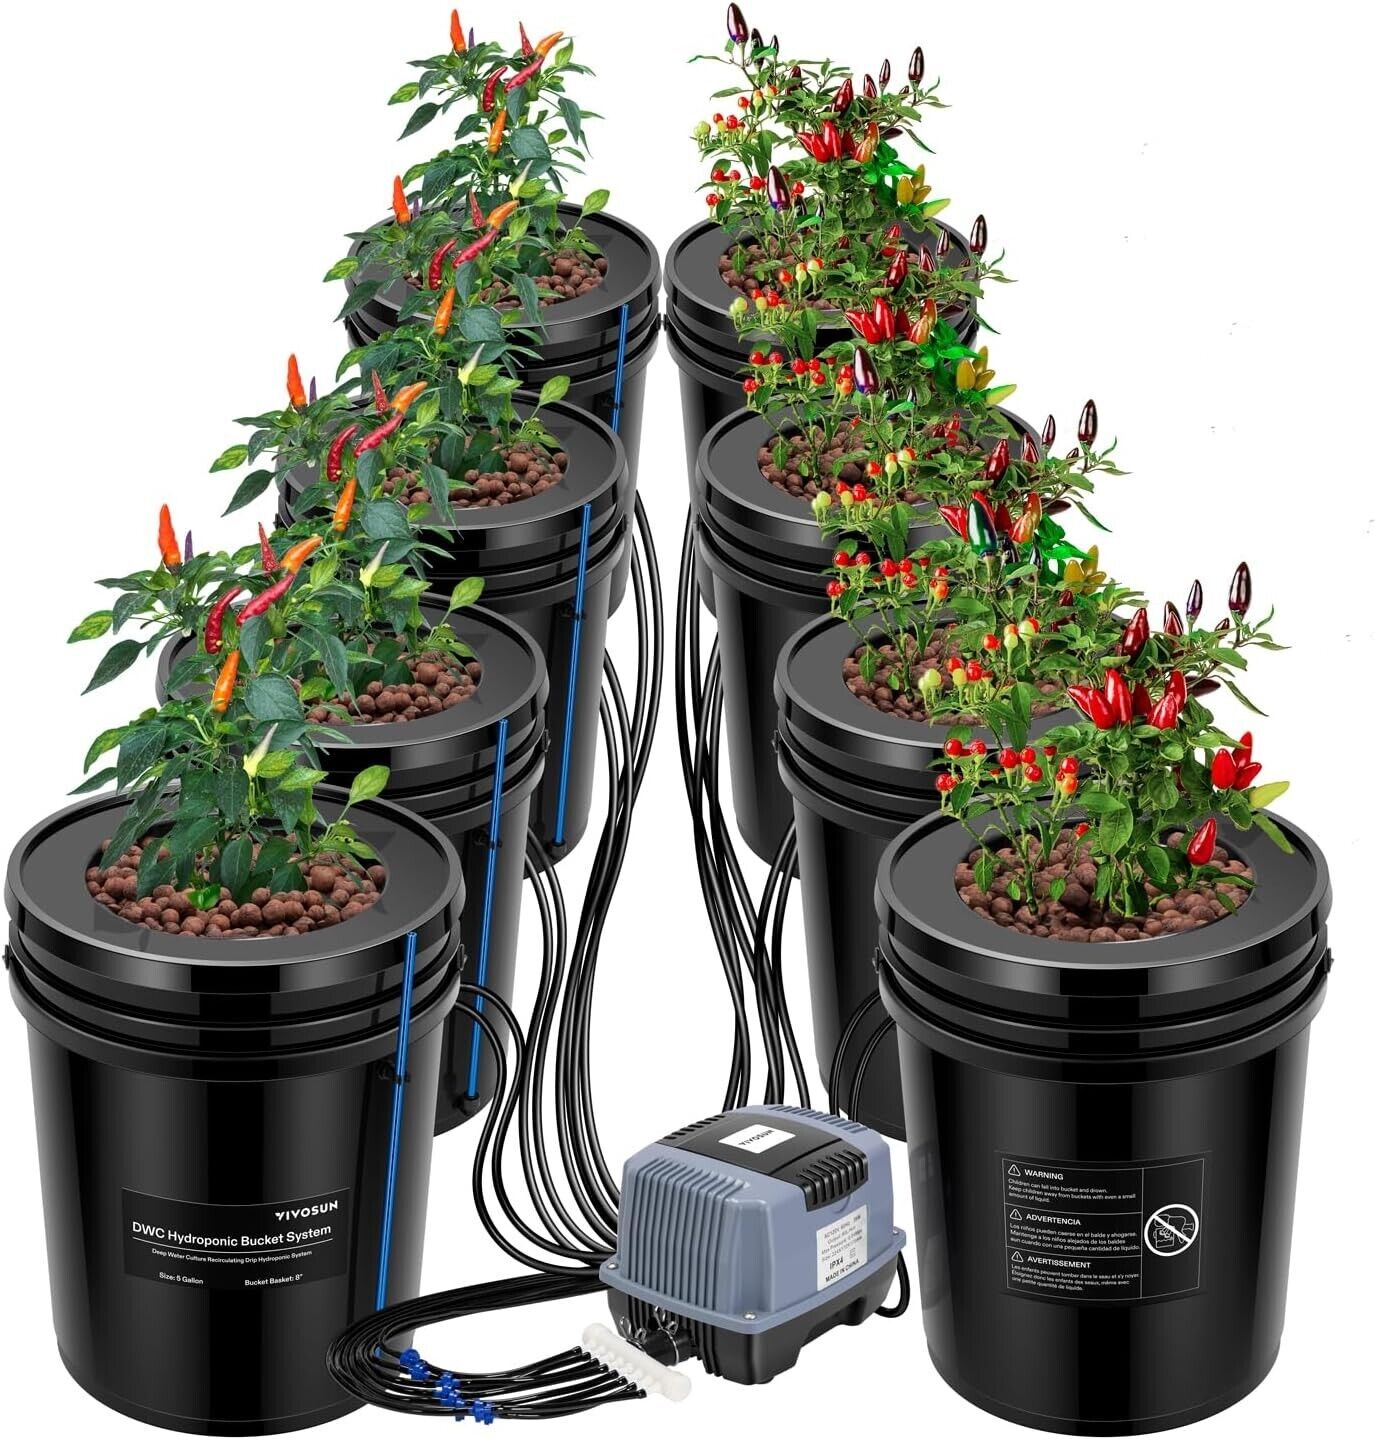 VIVOSUN 8 Bucket  5 Gal DWC Hydroponics Grow System w/ Top Drip Kit